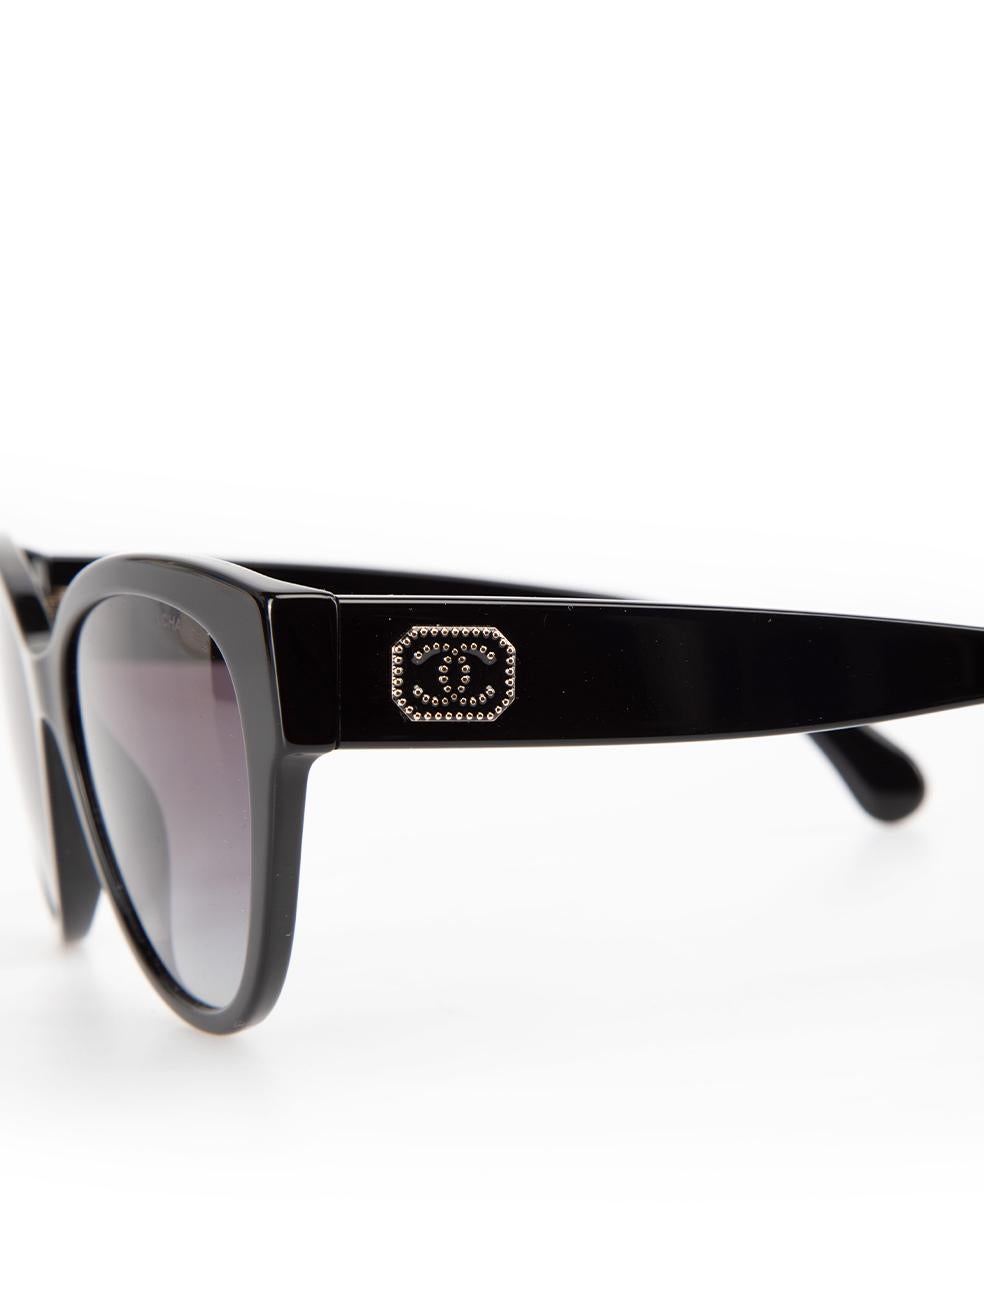 Chanel Black Butterfly Gradient Lens Sunglasses 2